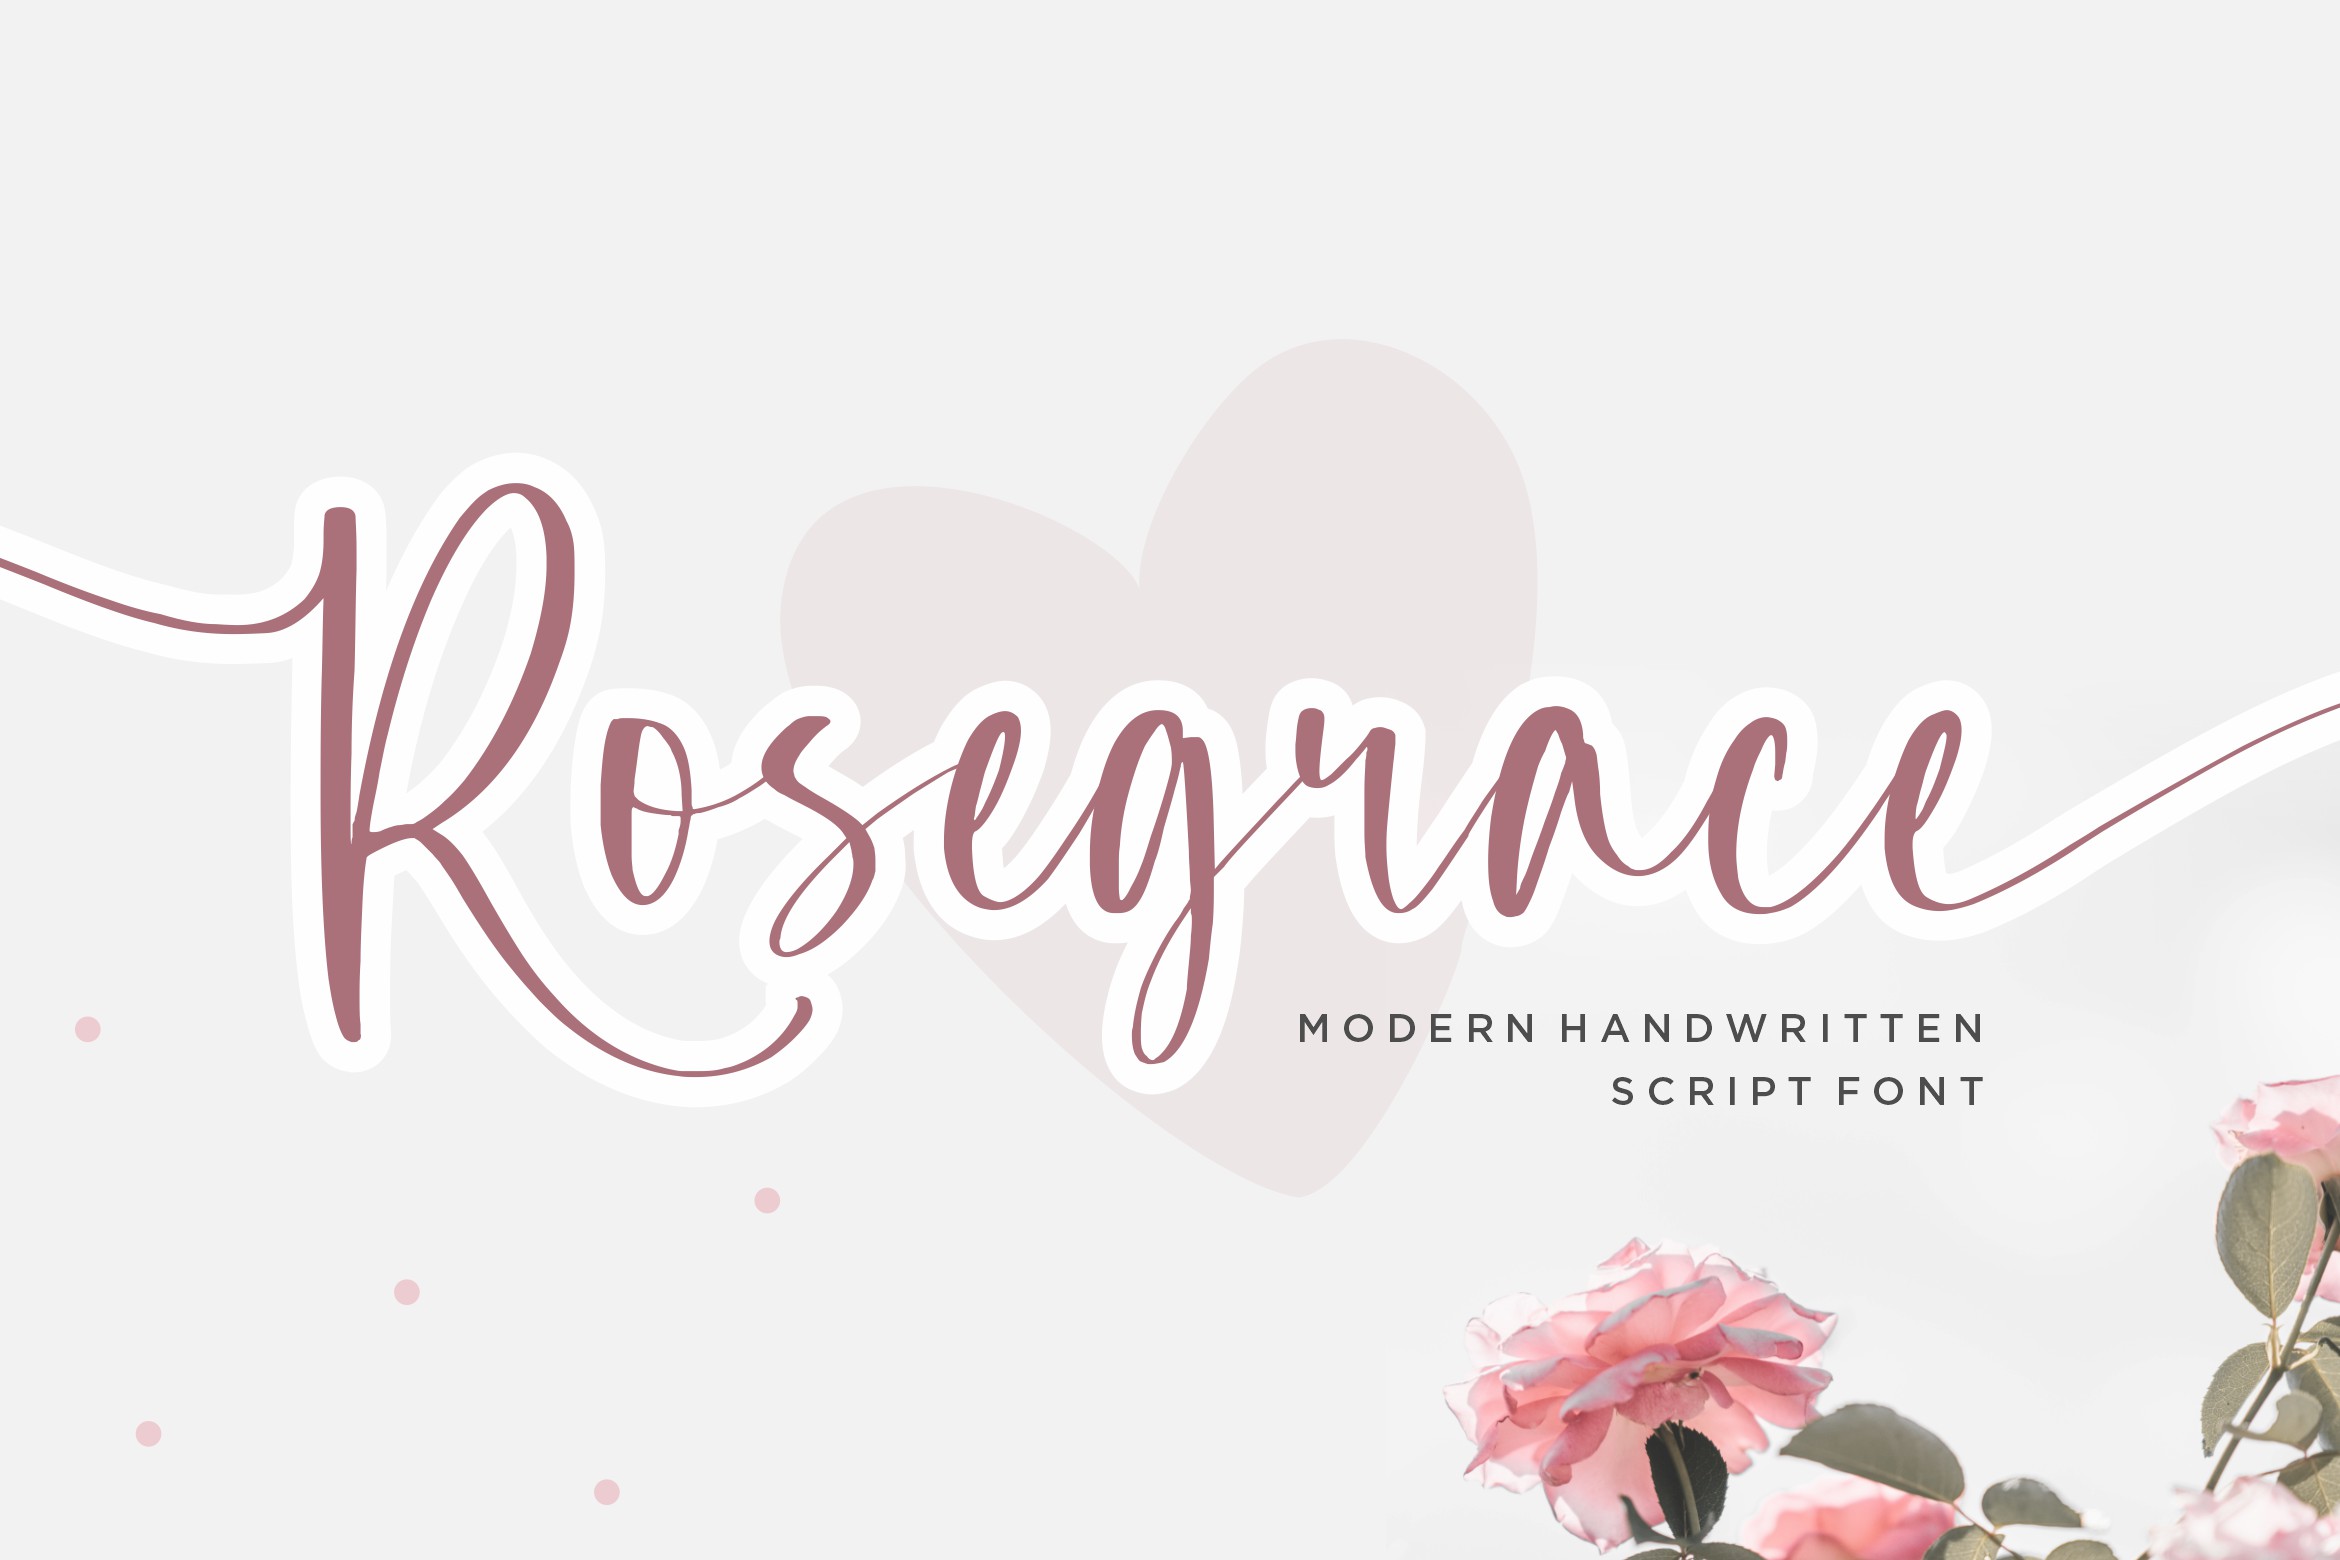 Rosegrace